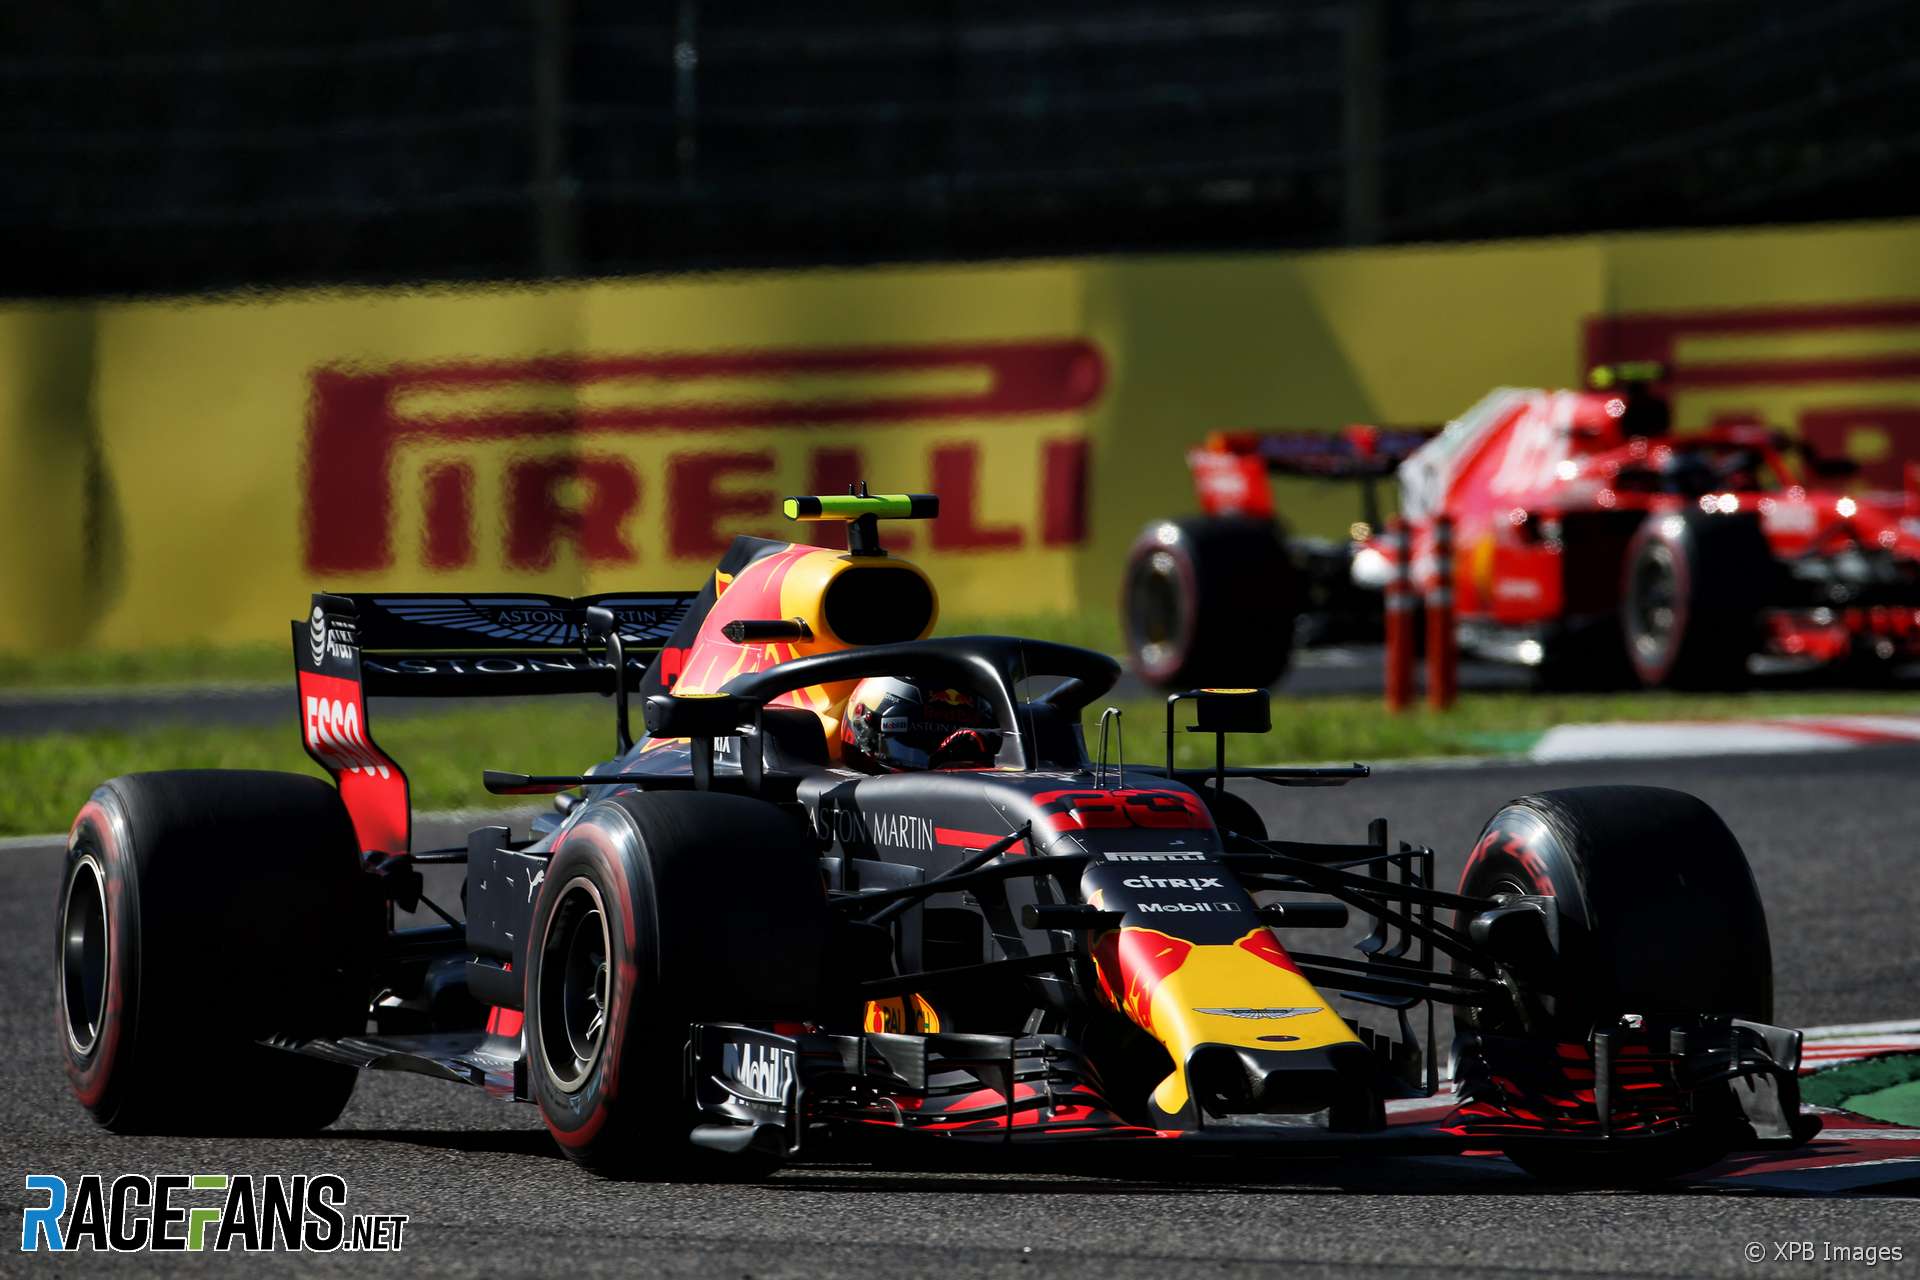 Max Verstappen, Red Bull, Suzuka, 2018